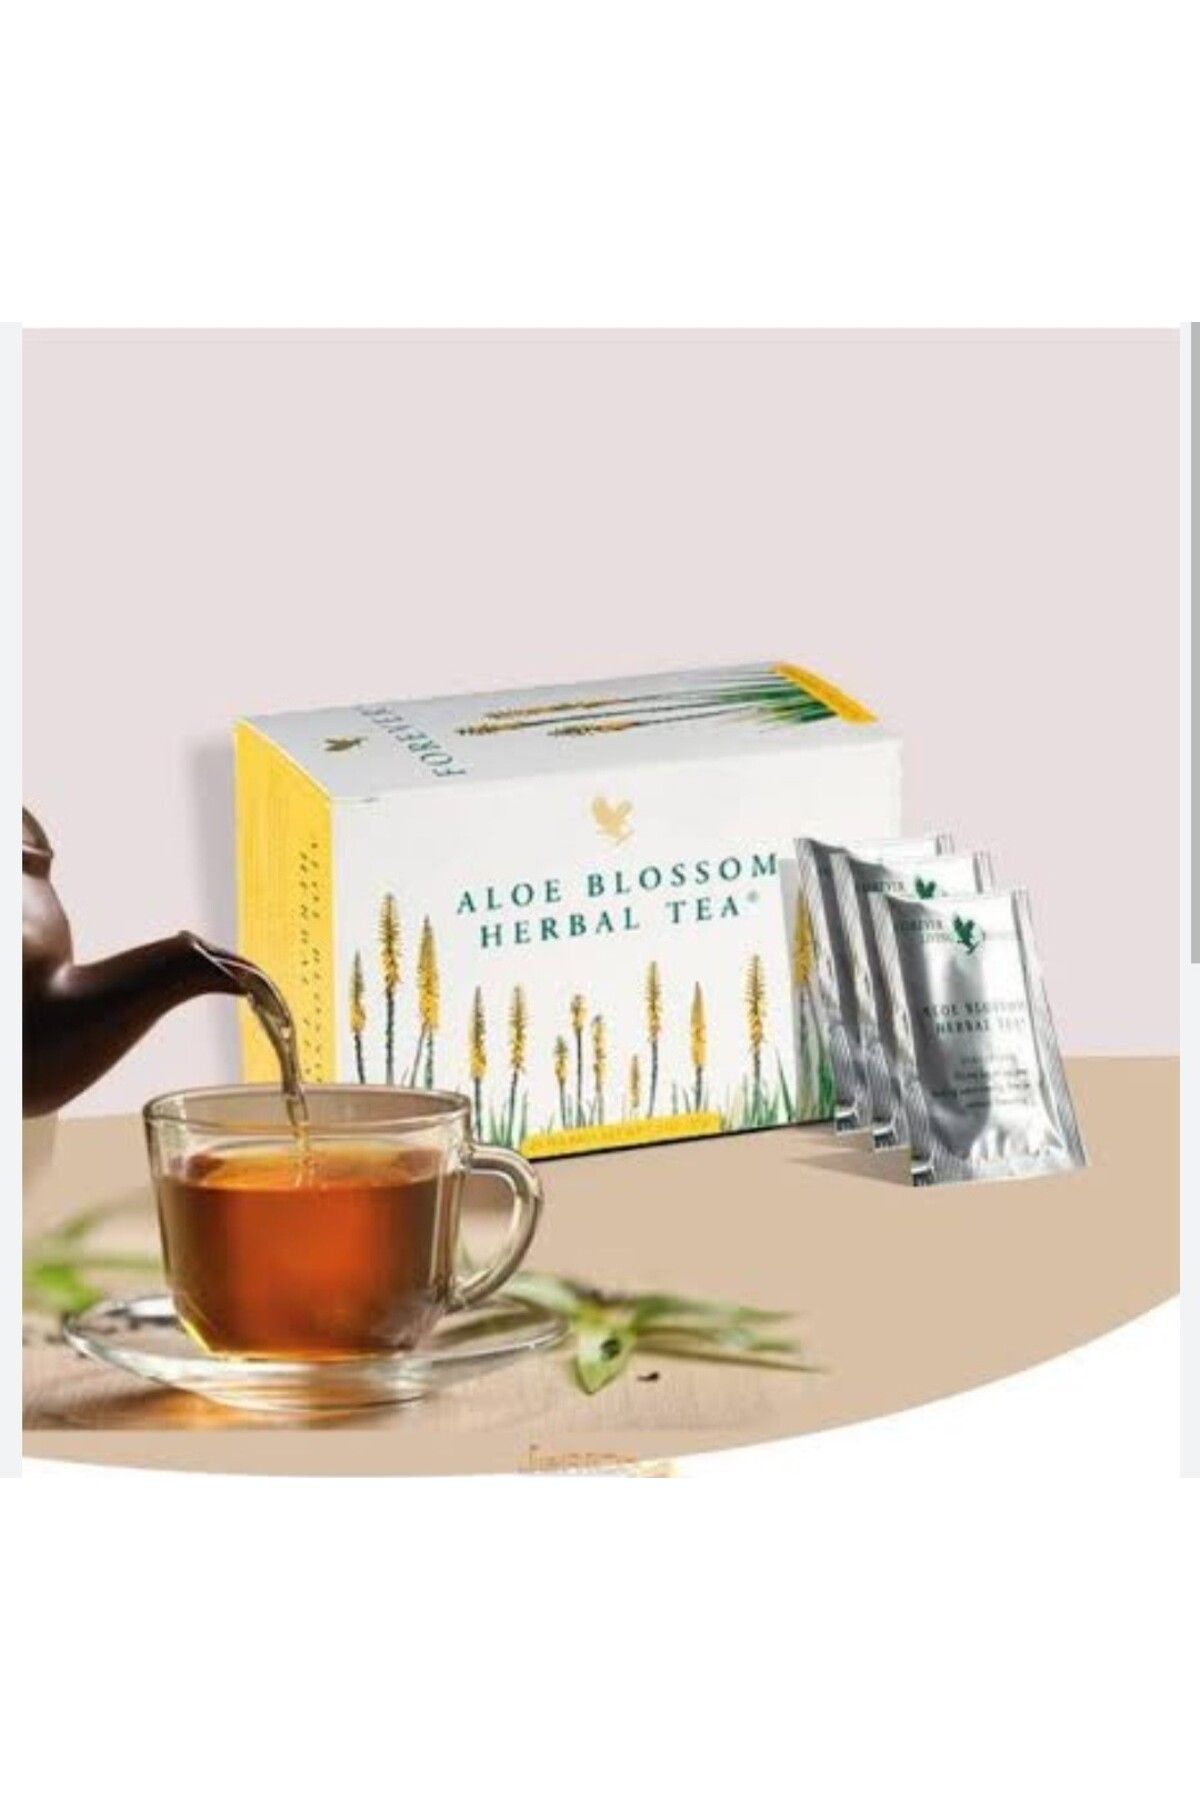 Forever Living Aloe Blossom Herbal Tea- Aloe Veralı Bitki Çayı